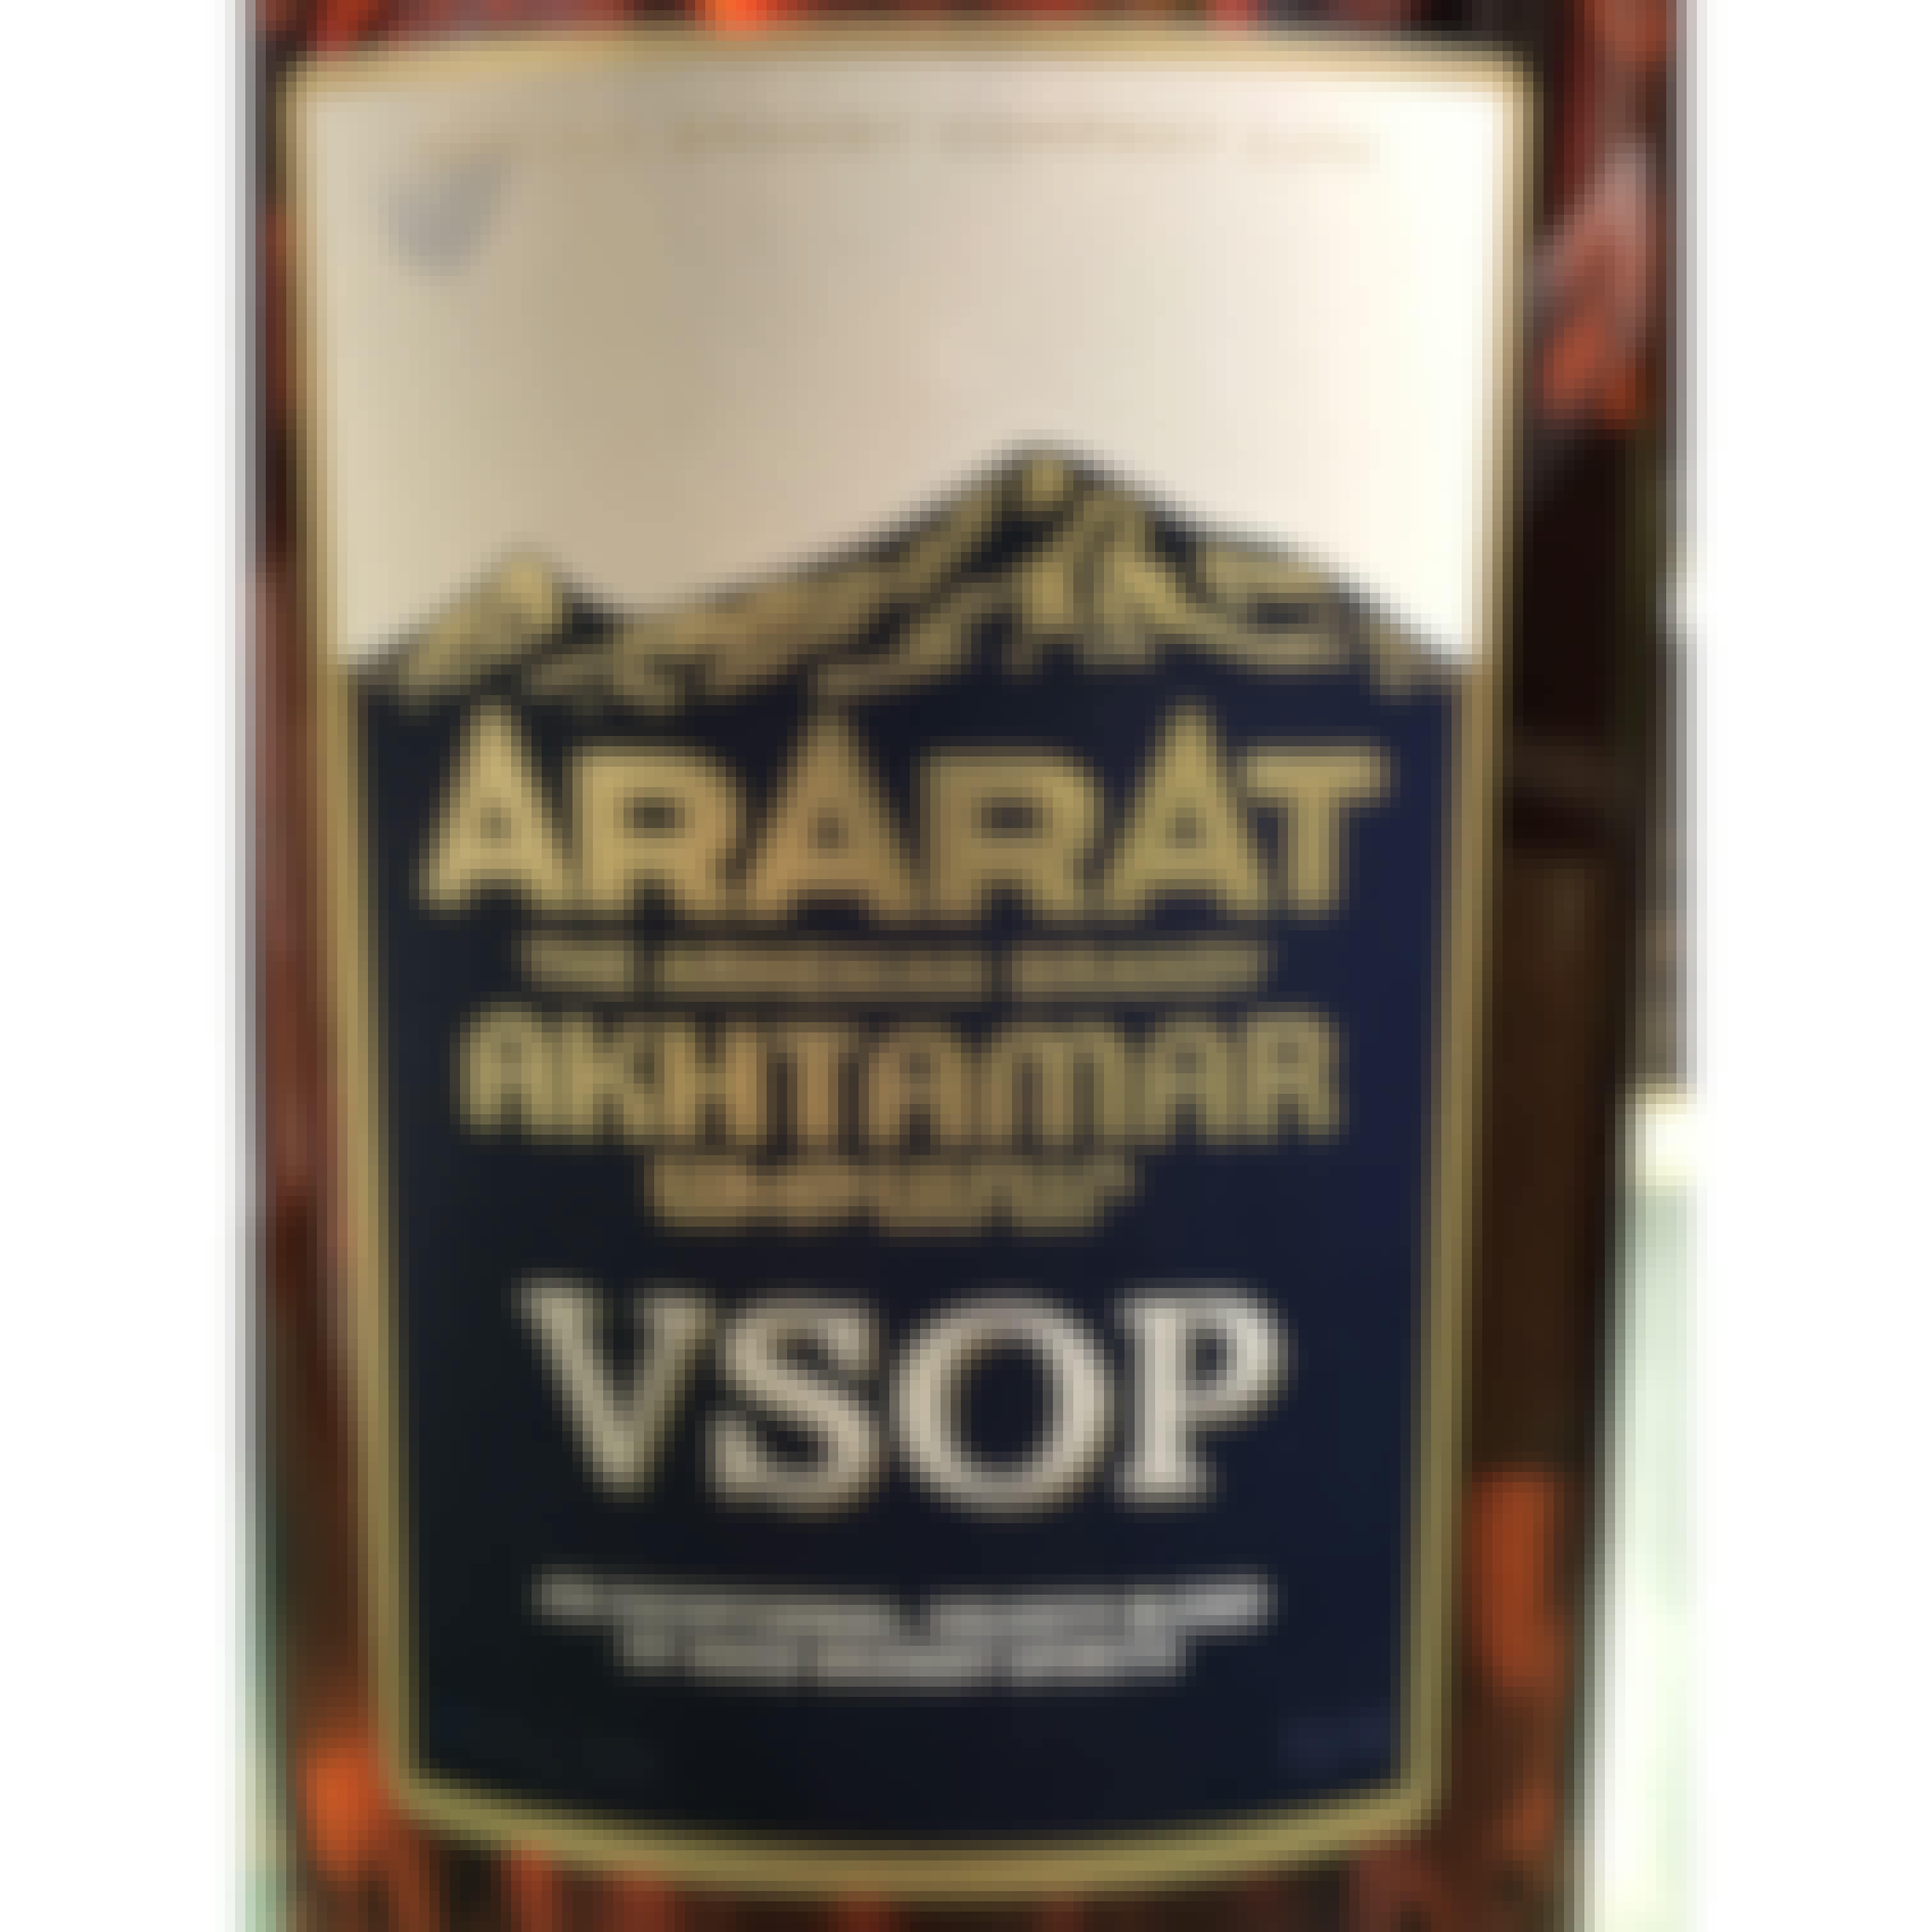 Ararat Akhtamar Brandy VSOP NV year old 700ml